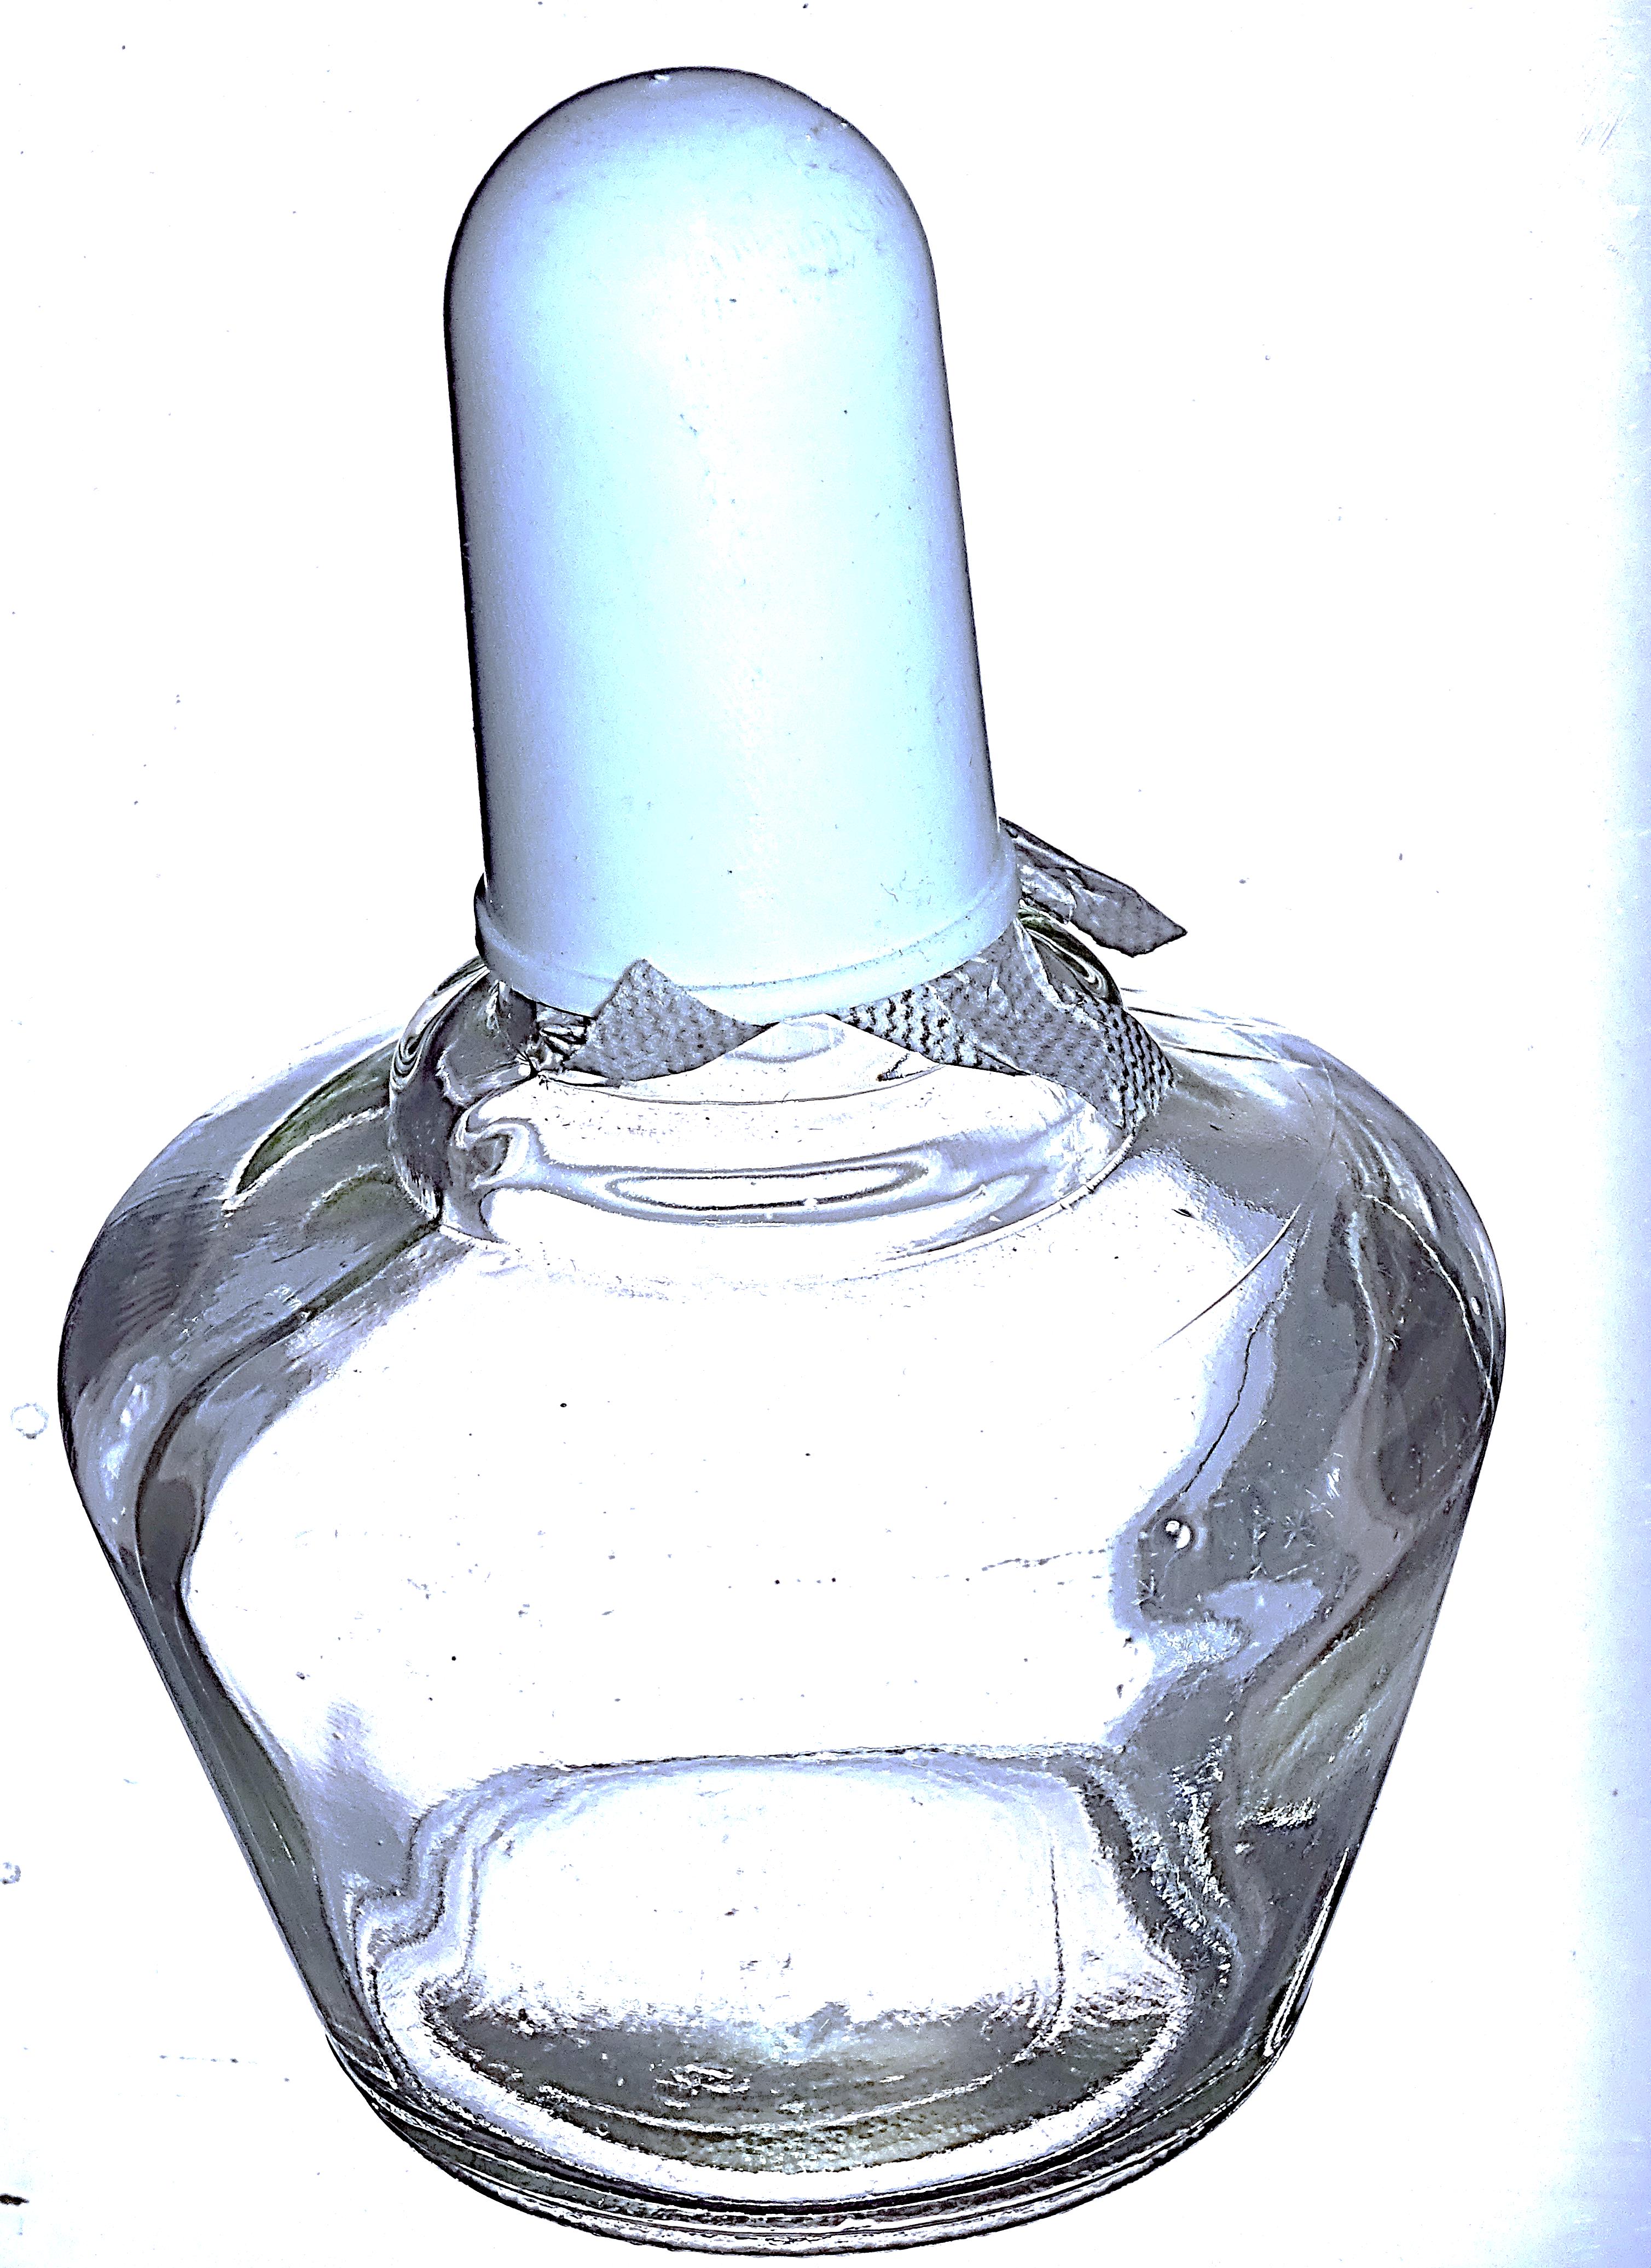 tl_files/2015/Articulos Lab/Mechero alcohol en vidrio tapa teflon.jpg